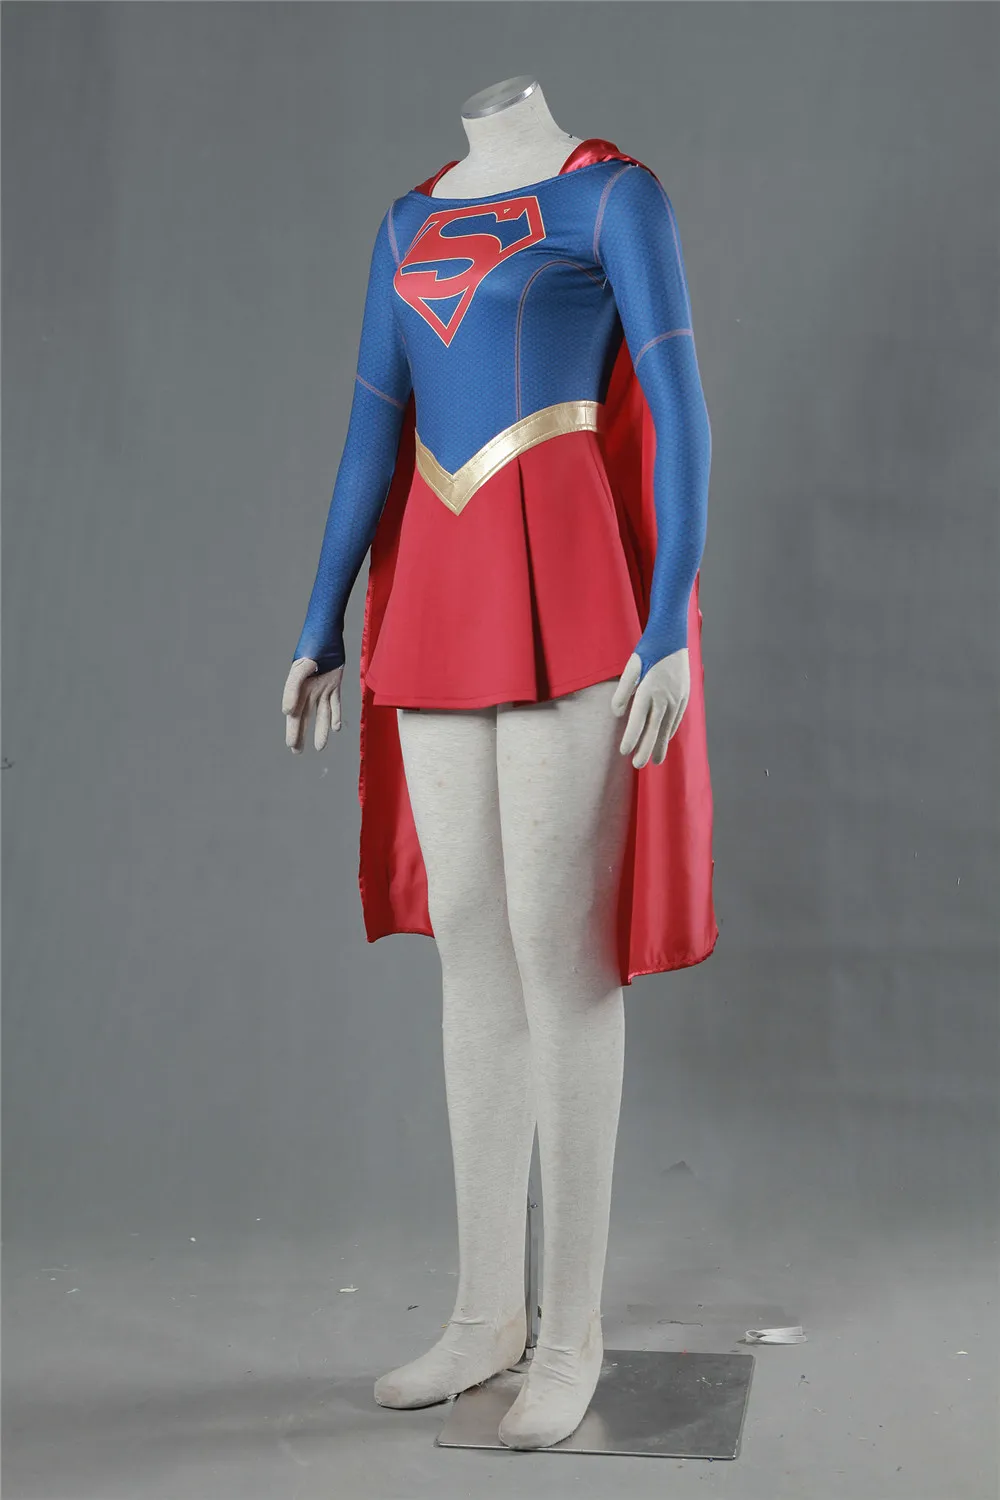 Supergirl cosplay halloween costumes308w